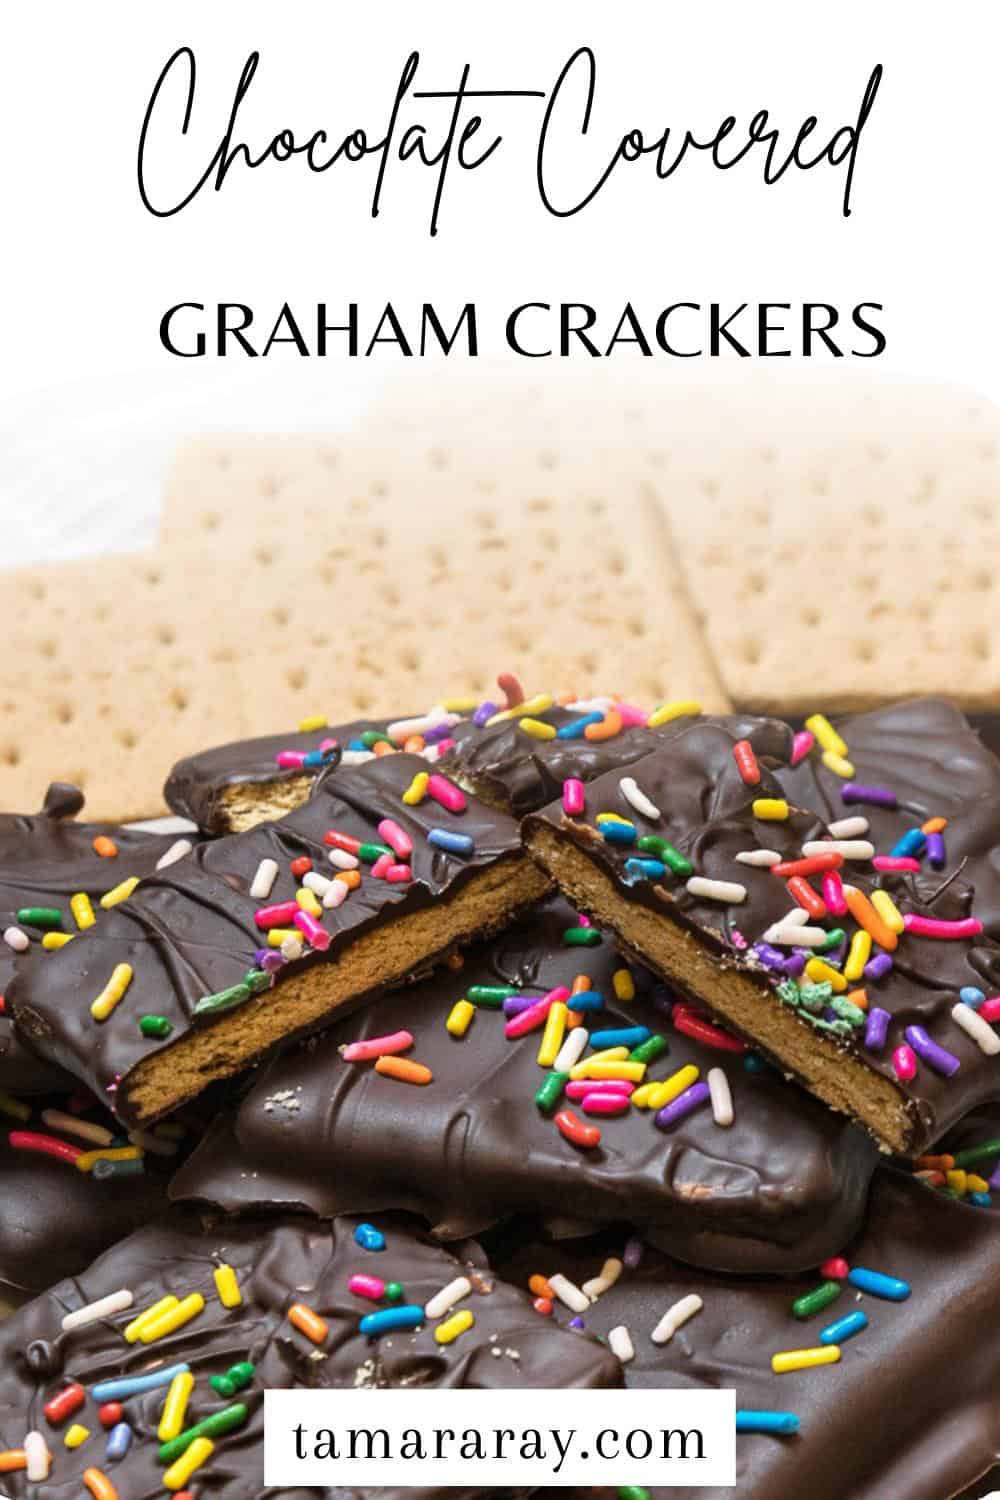 Chocolate covered graham crackers.